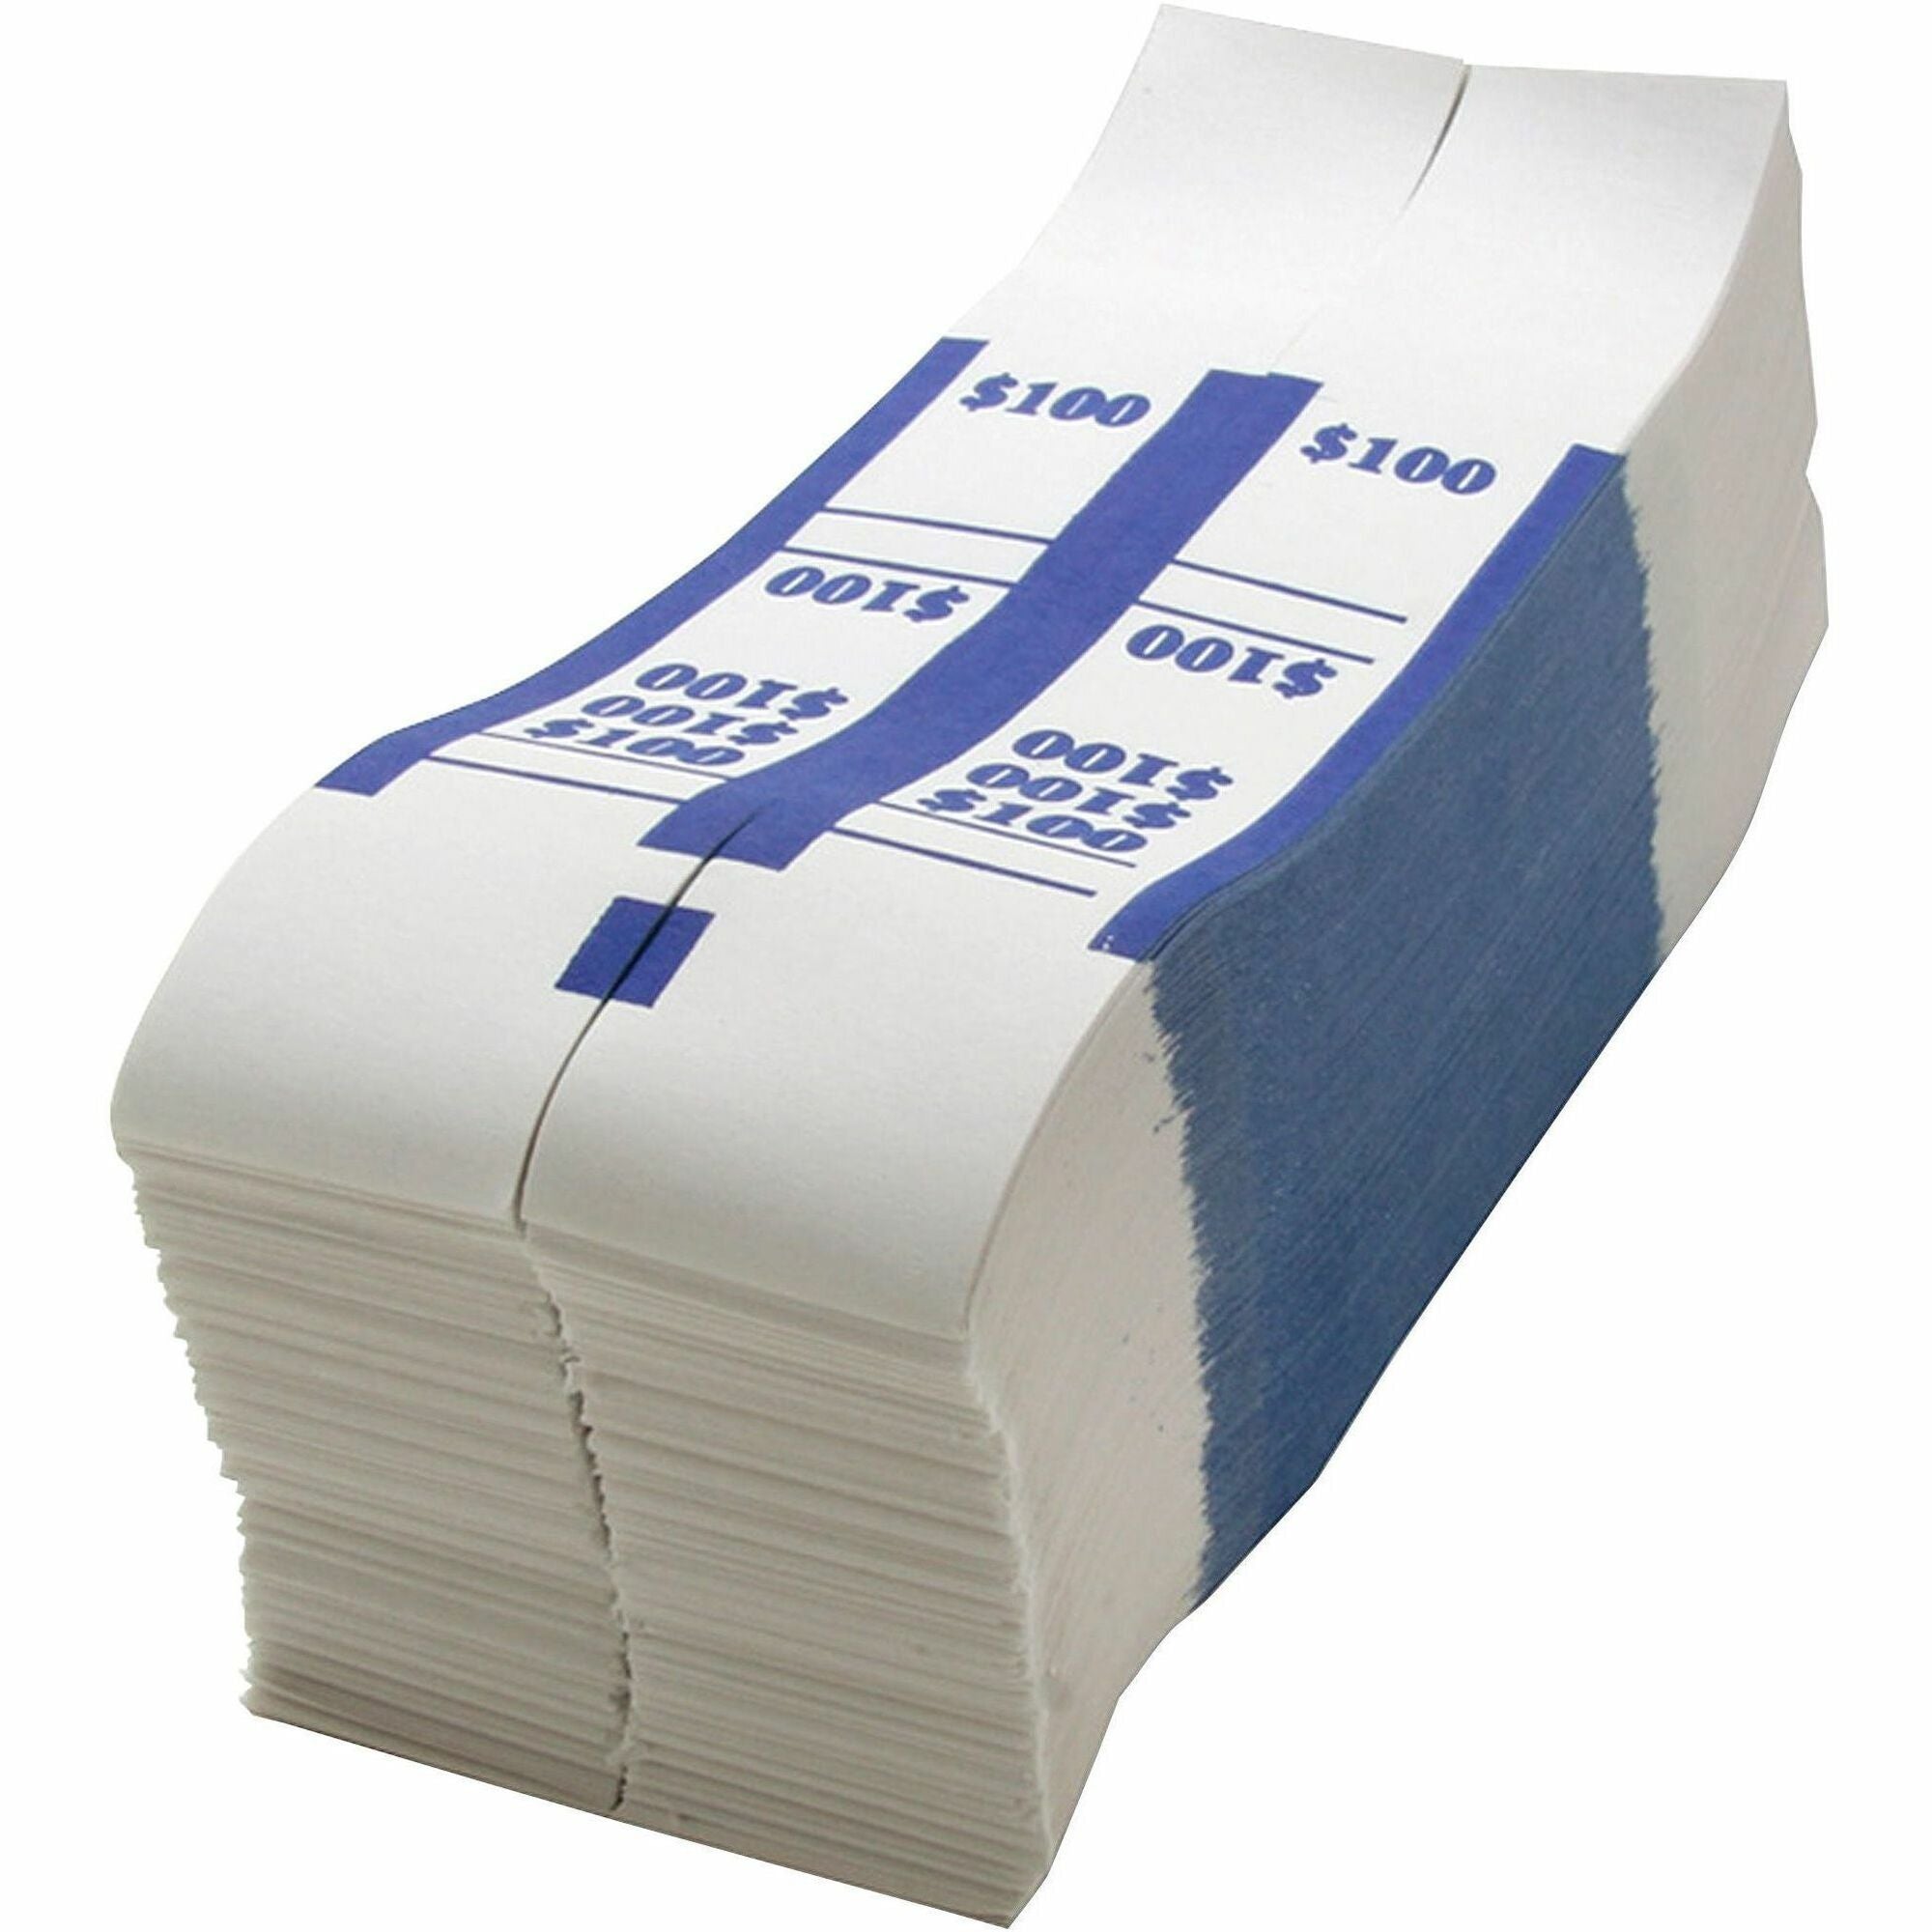 Sparco White Kraft ABA Bill Straps - 1000 Wrap(s)Total $100 in $1 Denomination - Kraft - Blue - 1000 / Pack - 